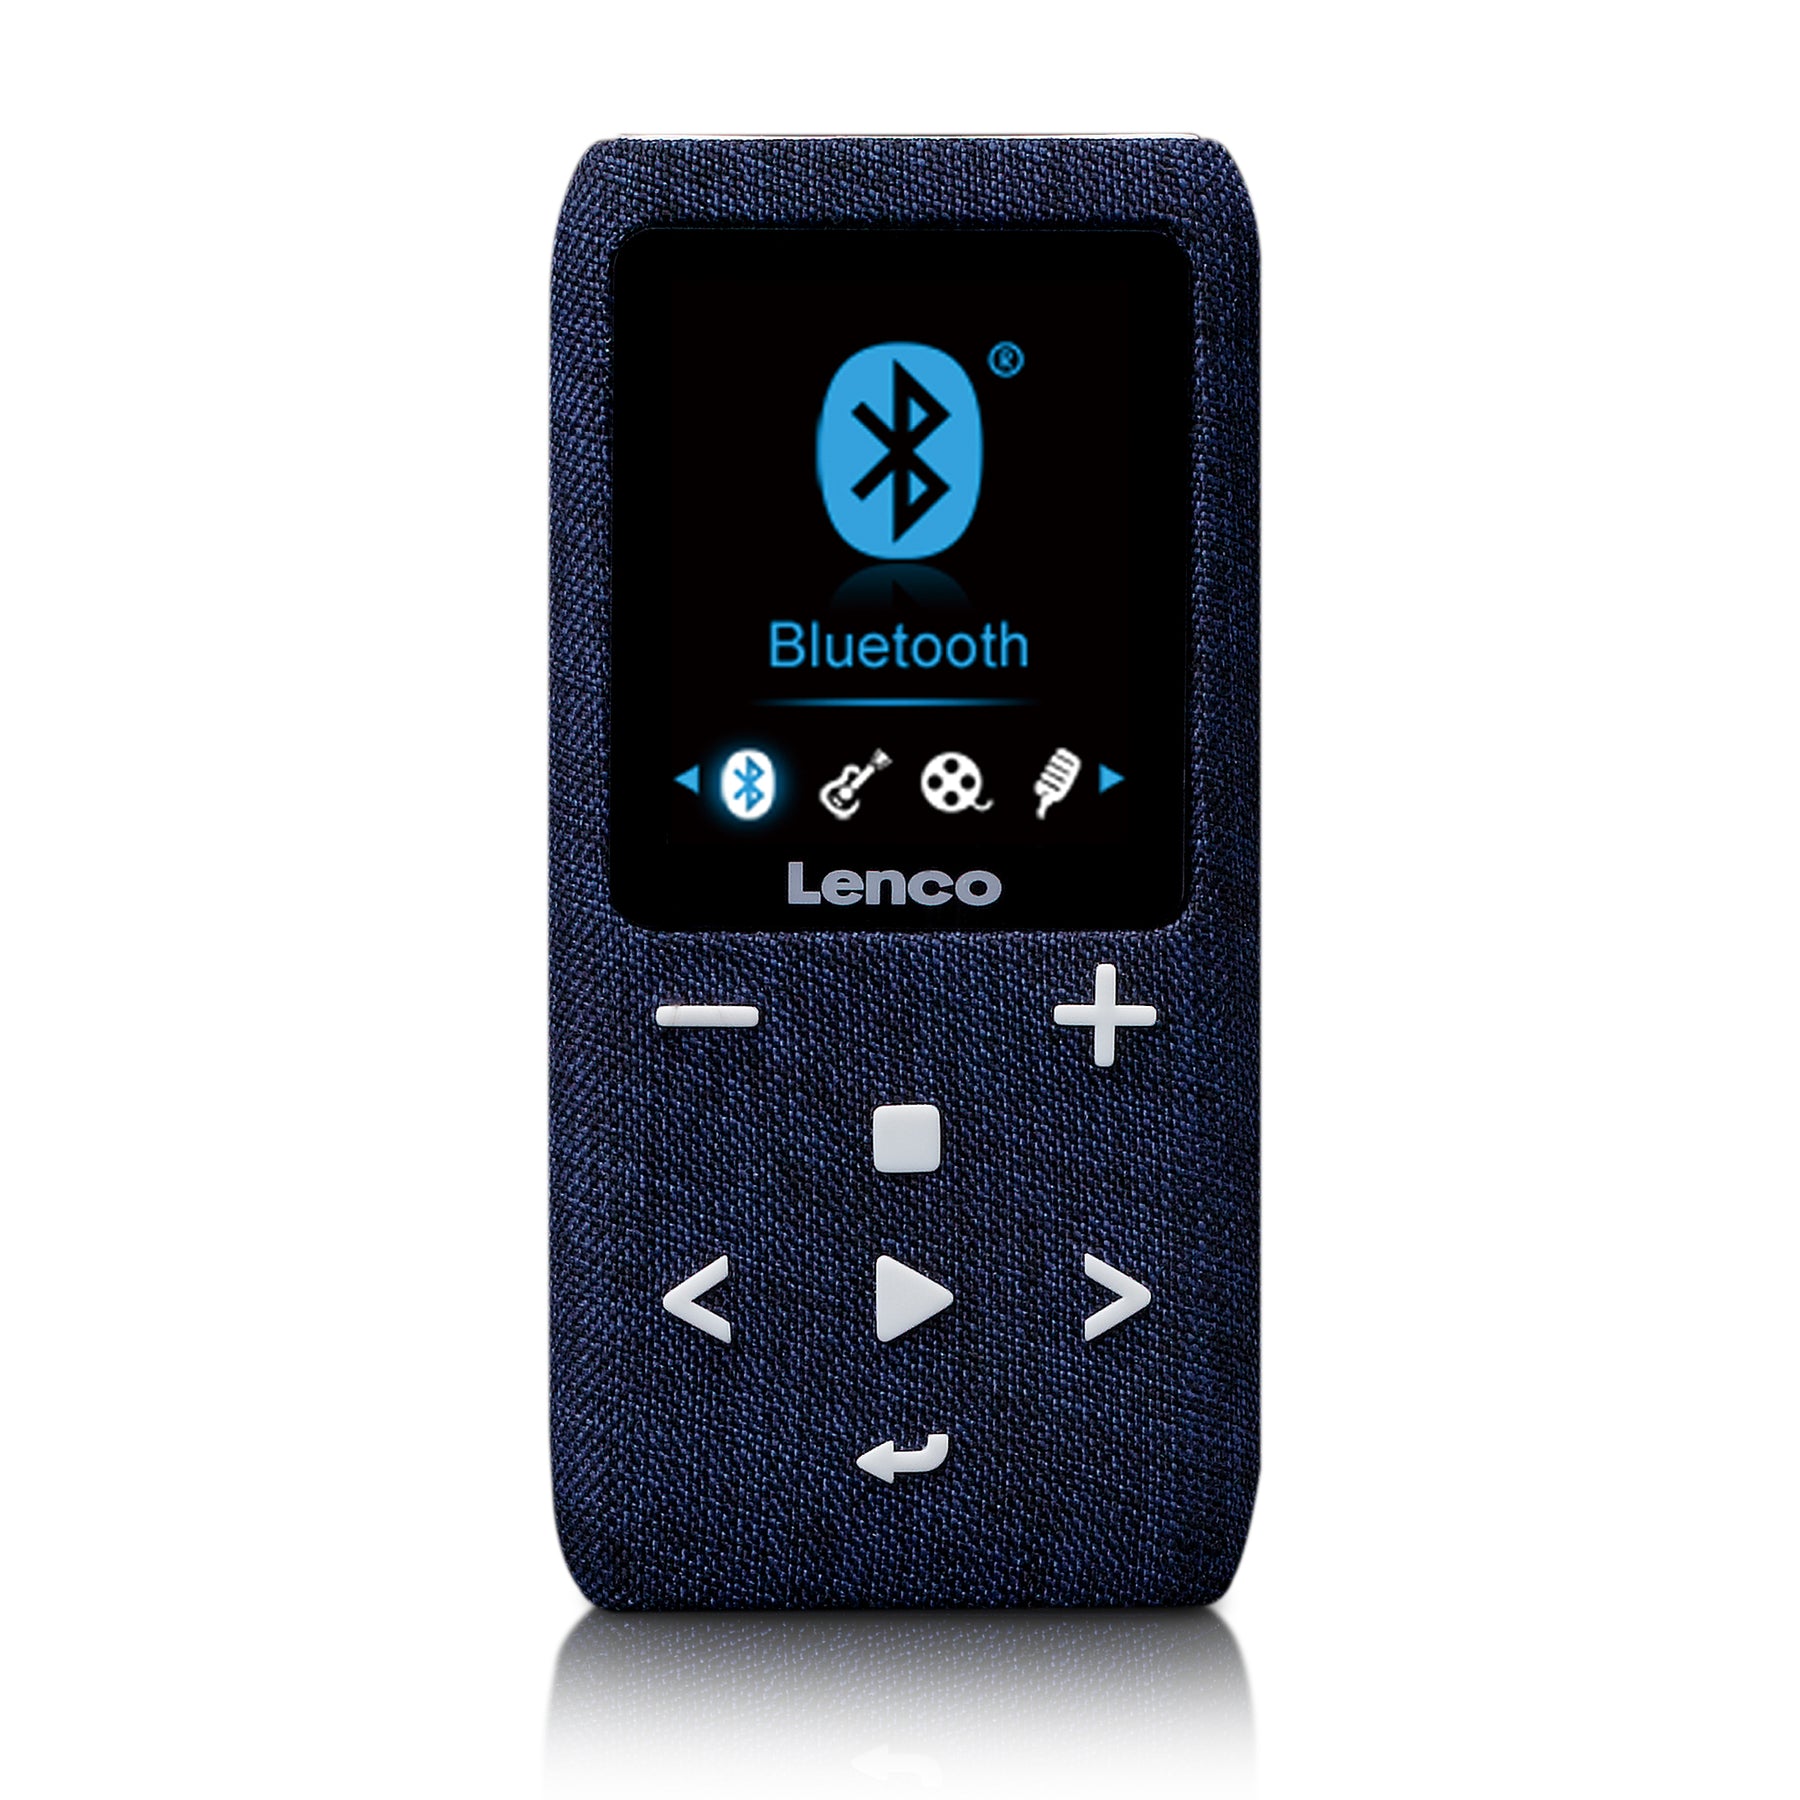 XEMIO-861BU Micro - Blauw 8GB Card LENCO Player Bluetooth® MP3/MP4 SD - met